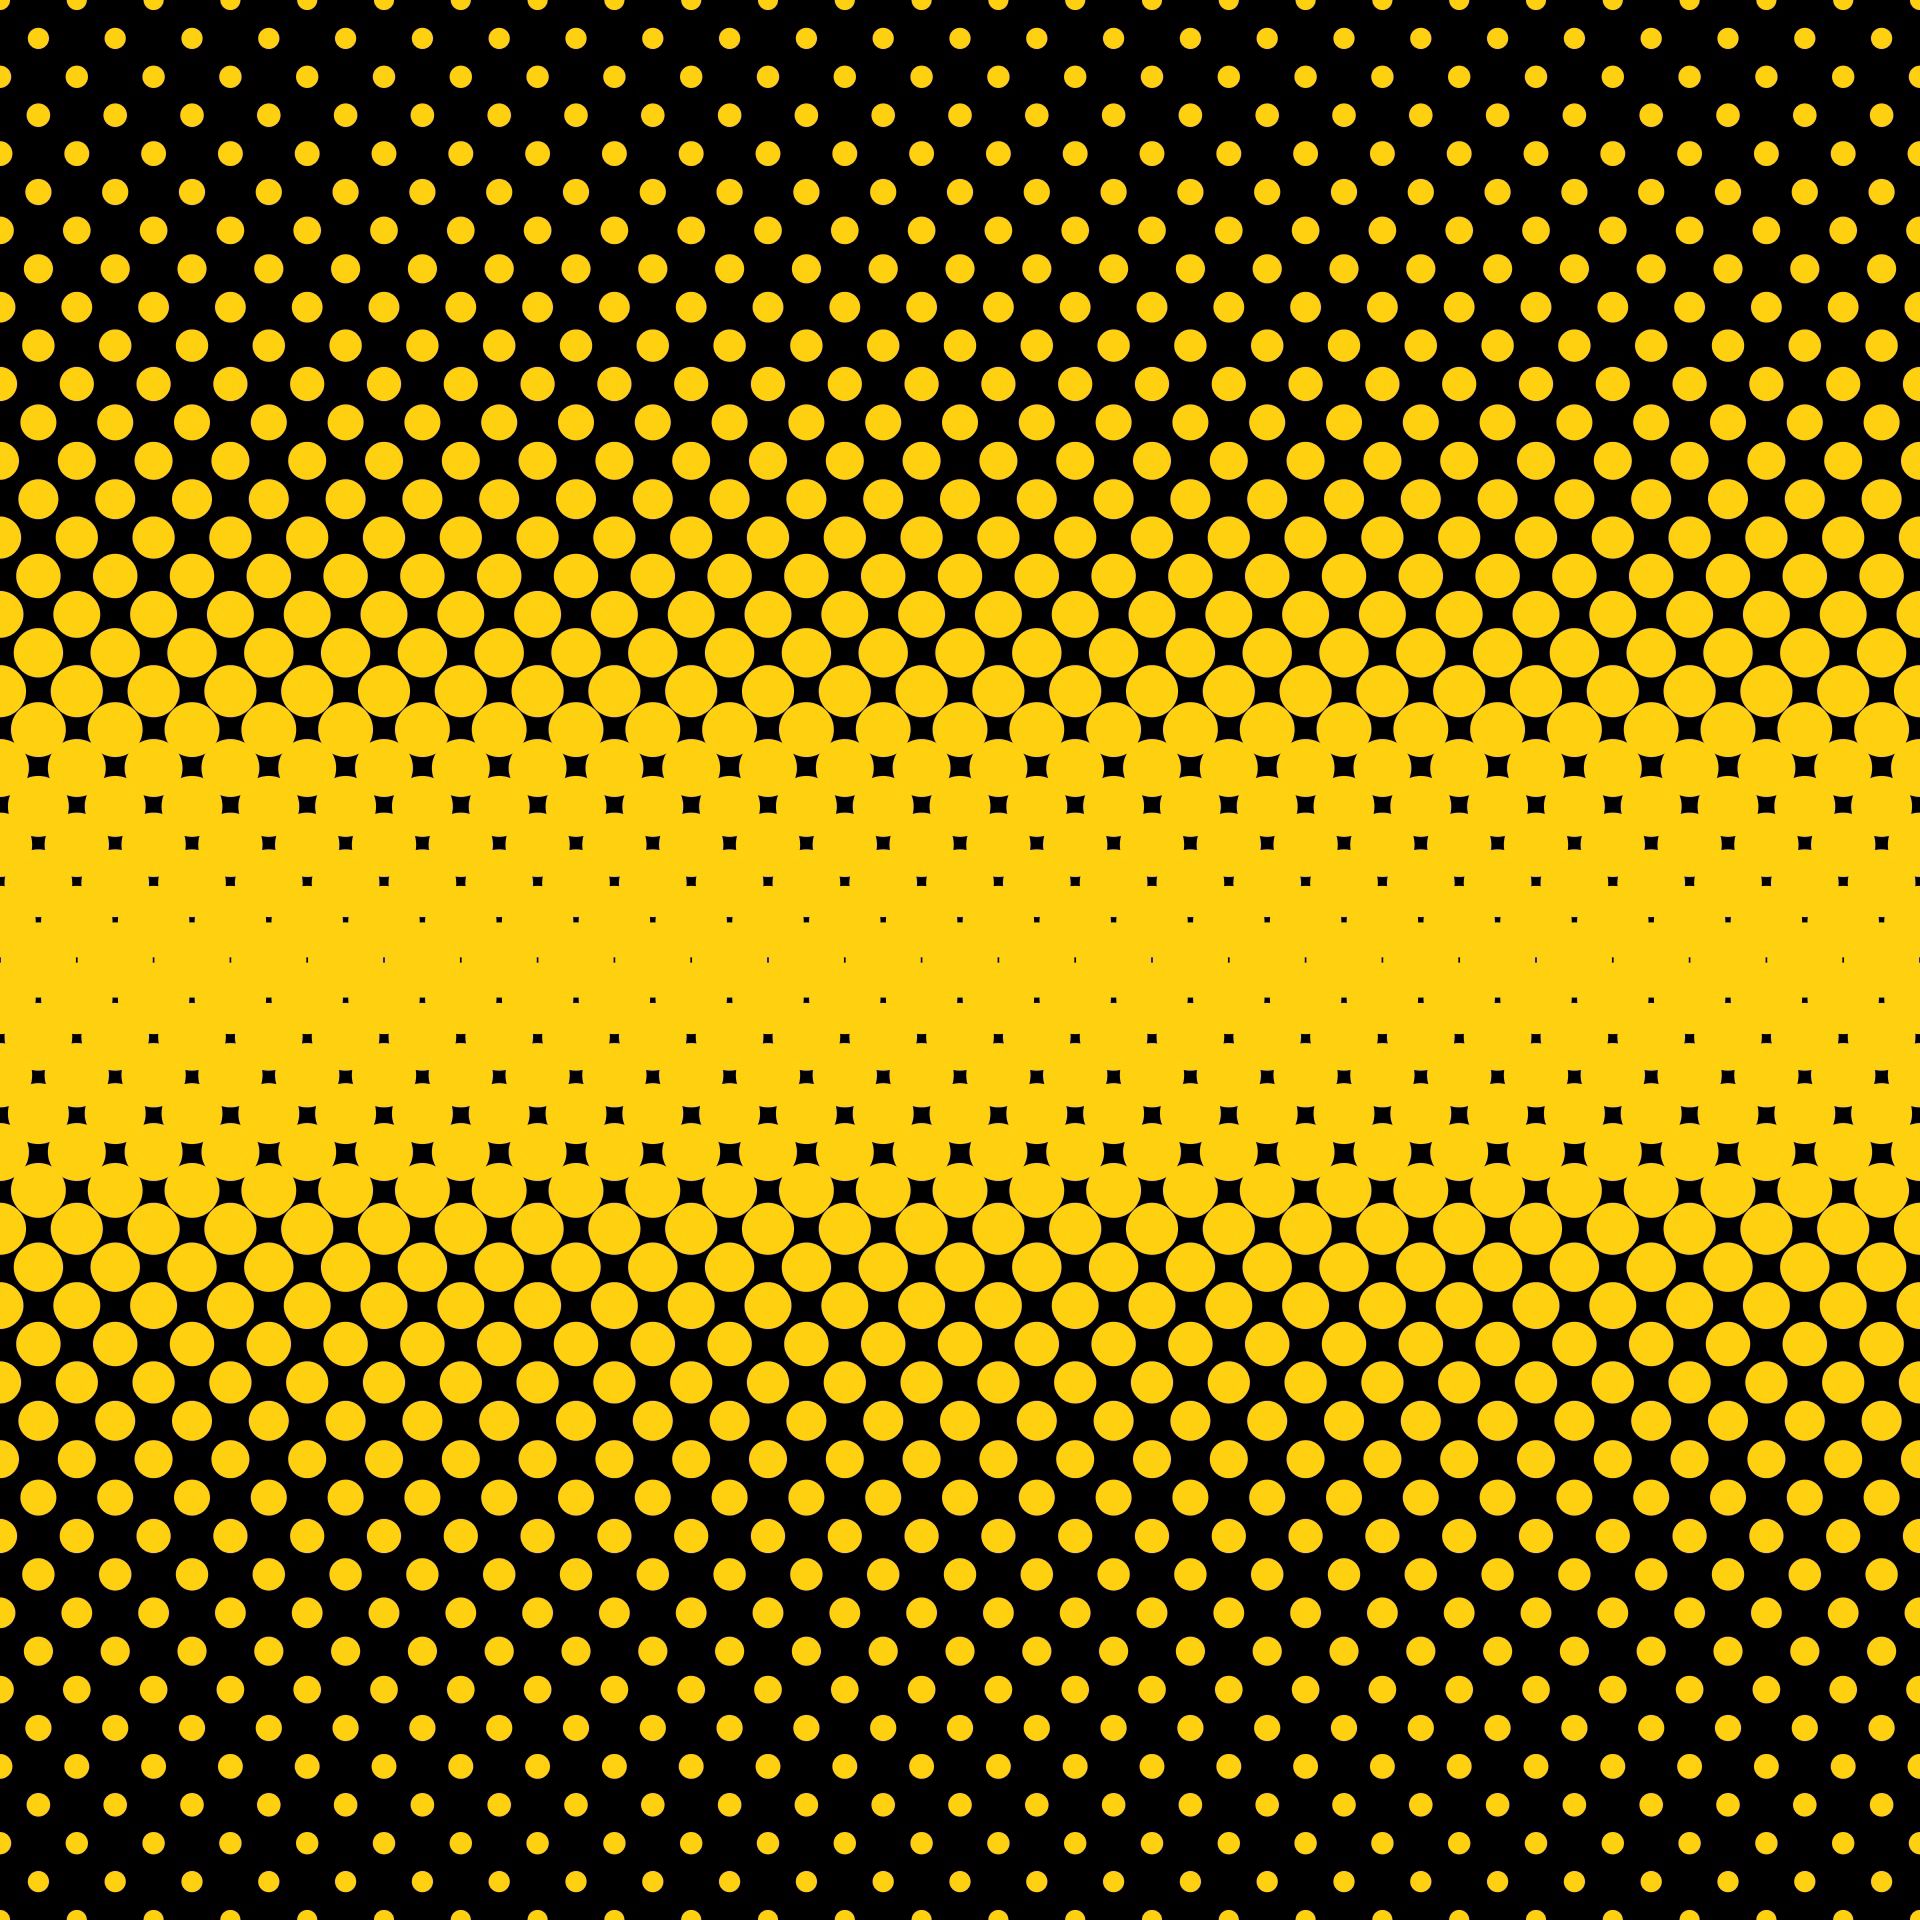 yellow, semitone, point, textures, texture, black, circles, points